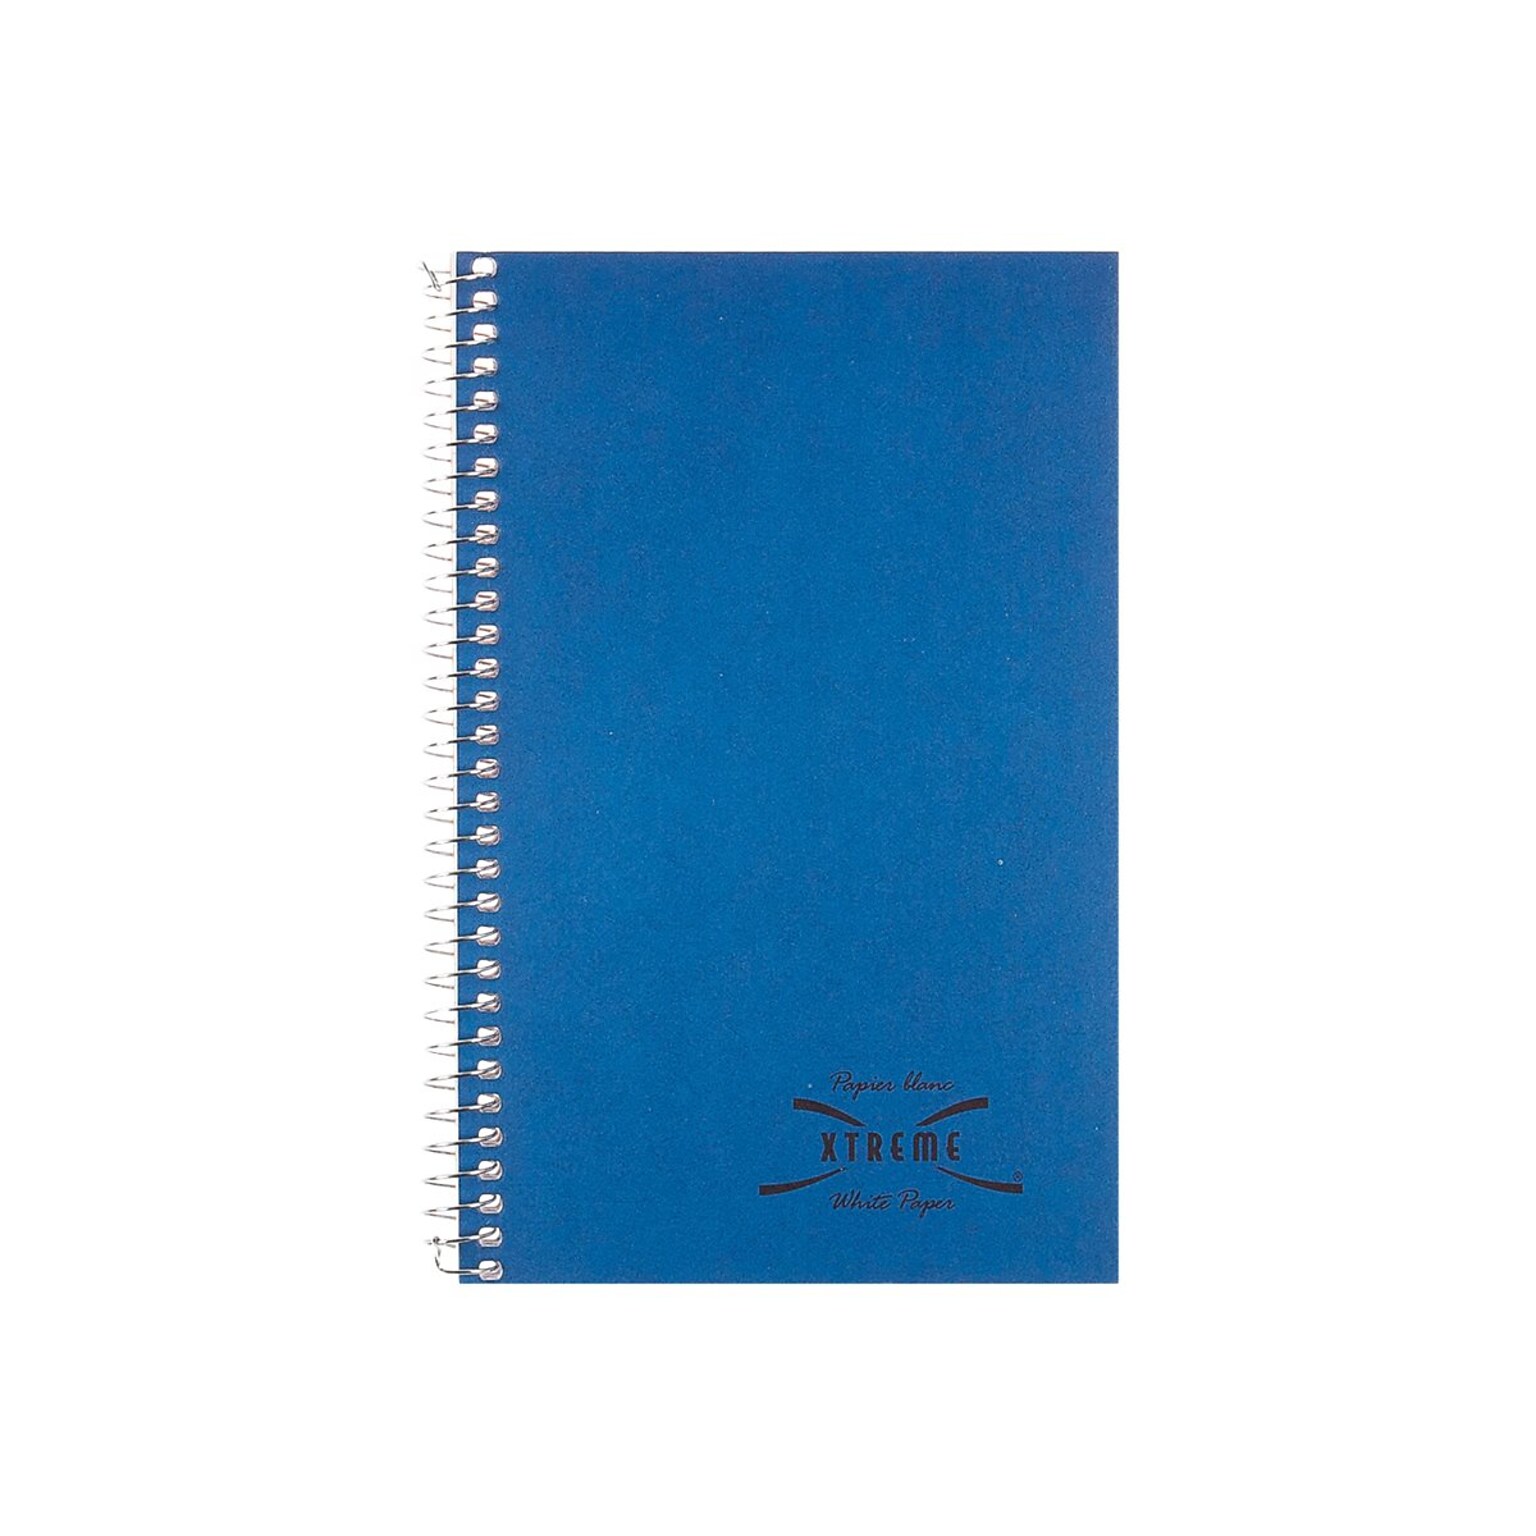 Xtreme Kolor Kraft 3-Subject Notebooks, 6 x 9.5, College Ruled, 150 Sheets, Blue (33-360)